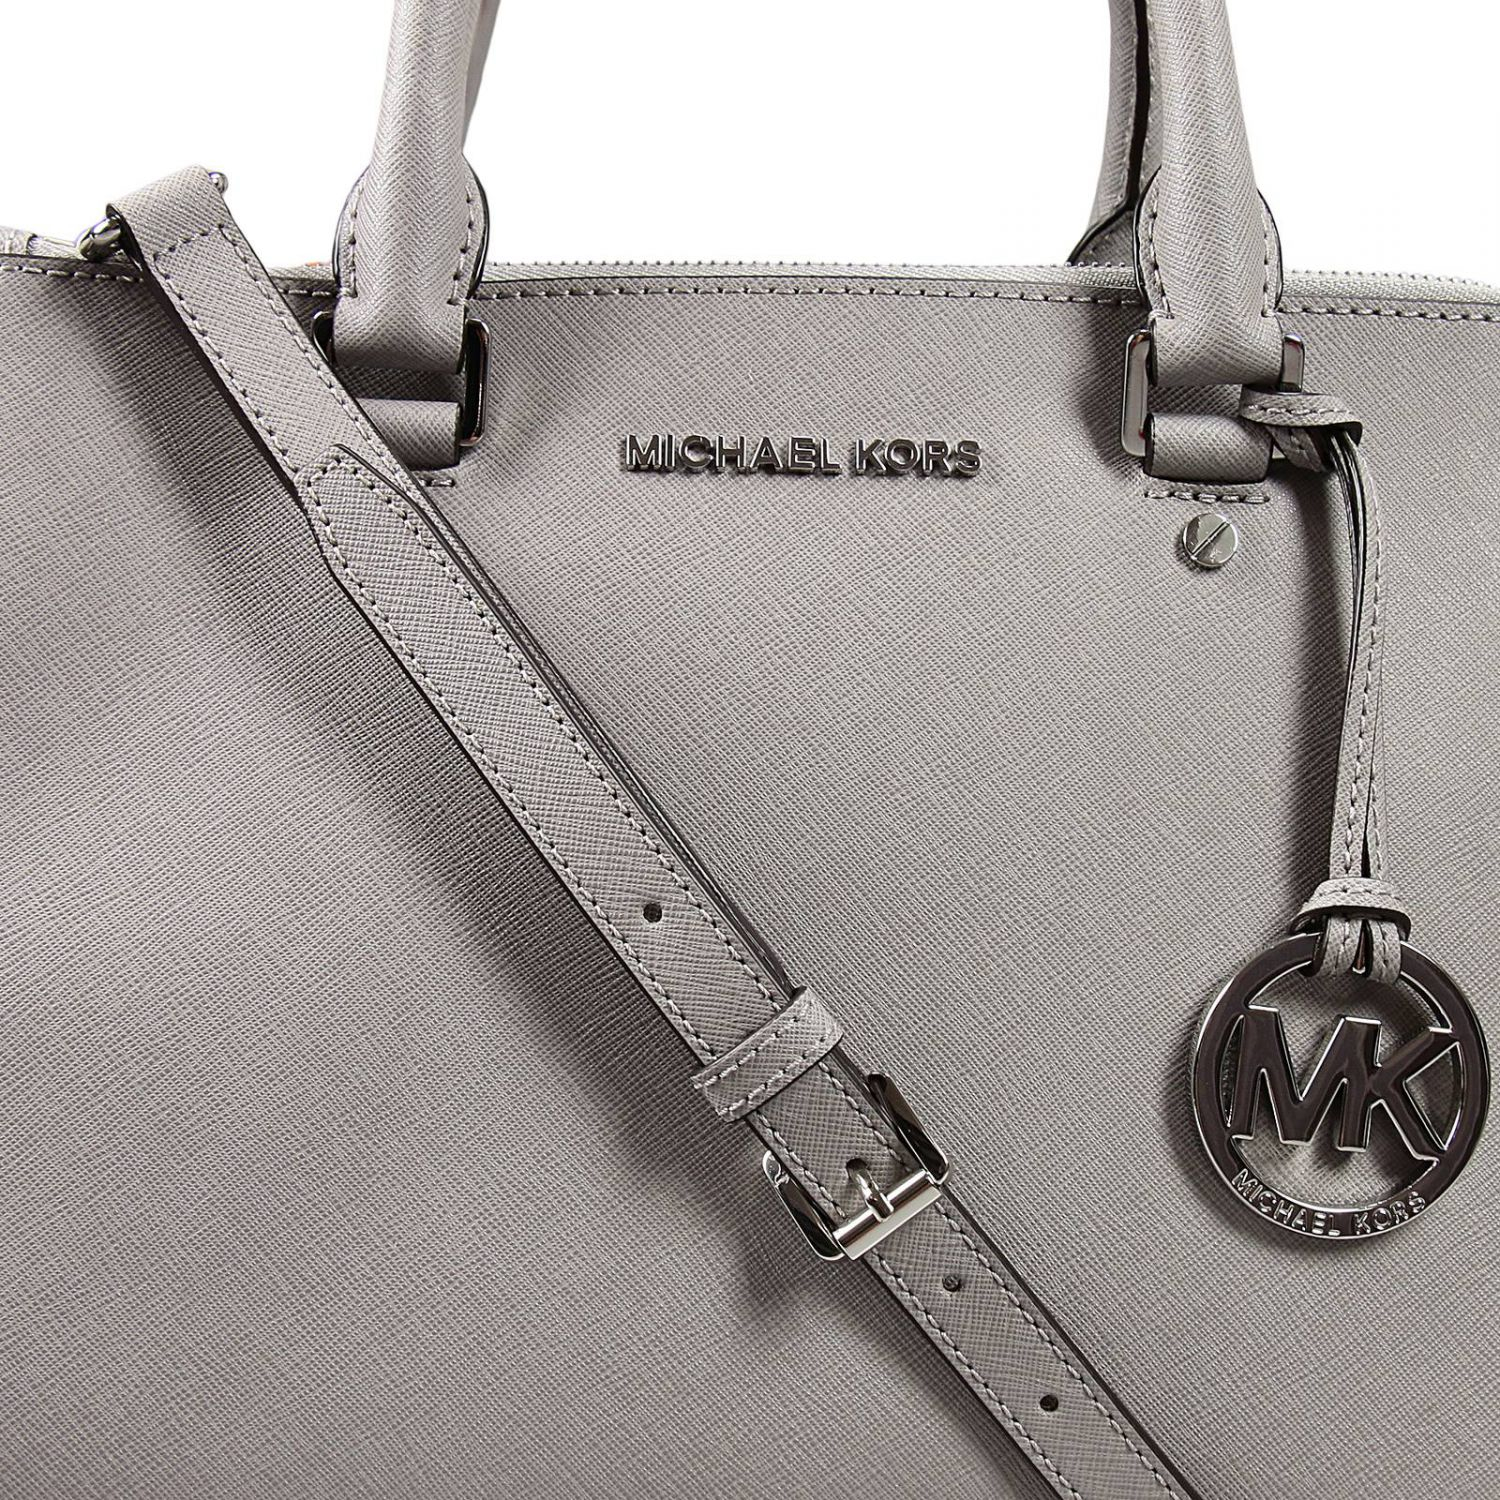 Lyst - Michael Kors Handbag Woman in Gray